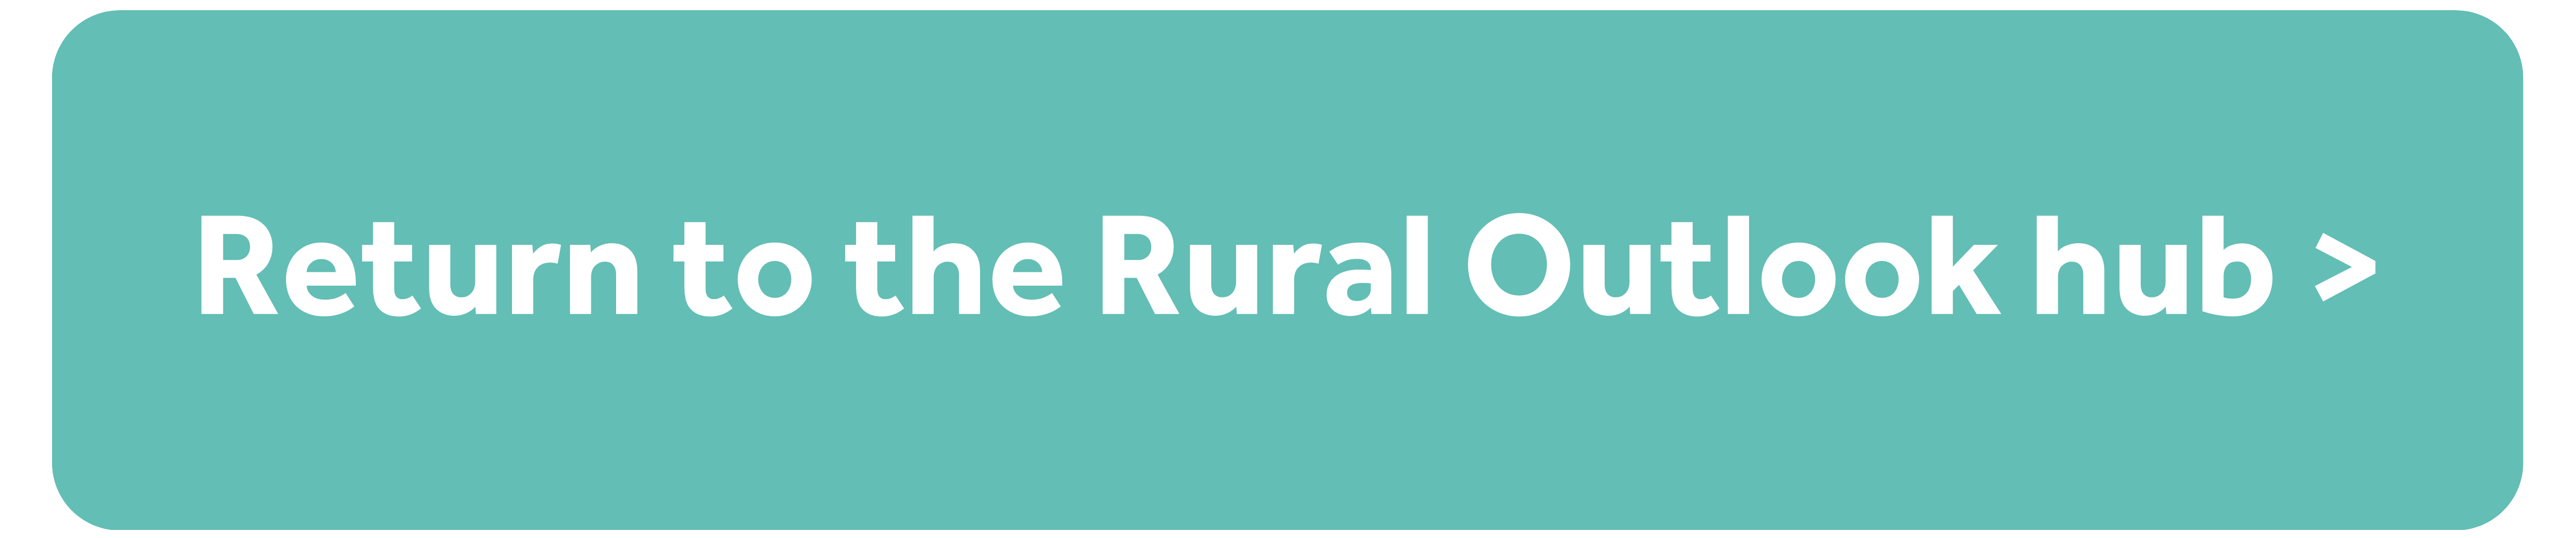 Return to the Rural Outlook hub .png